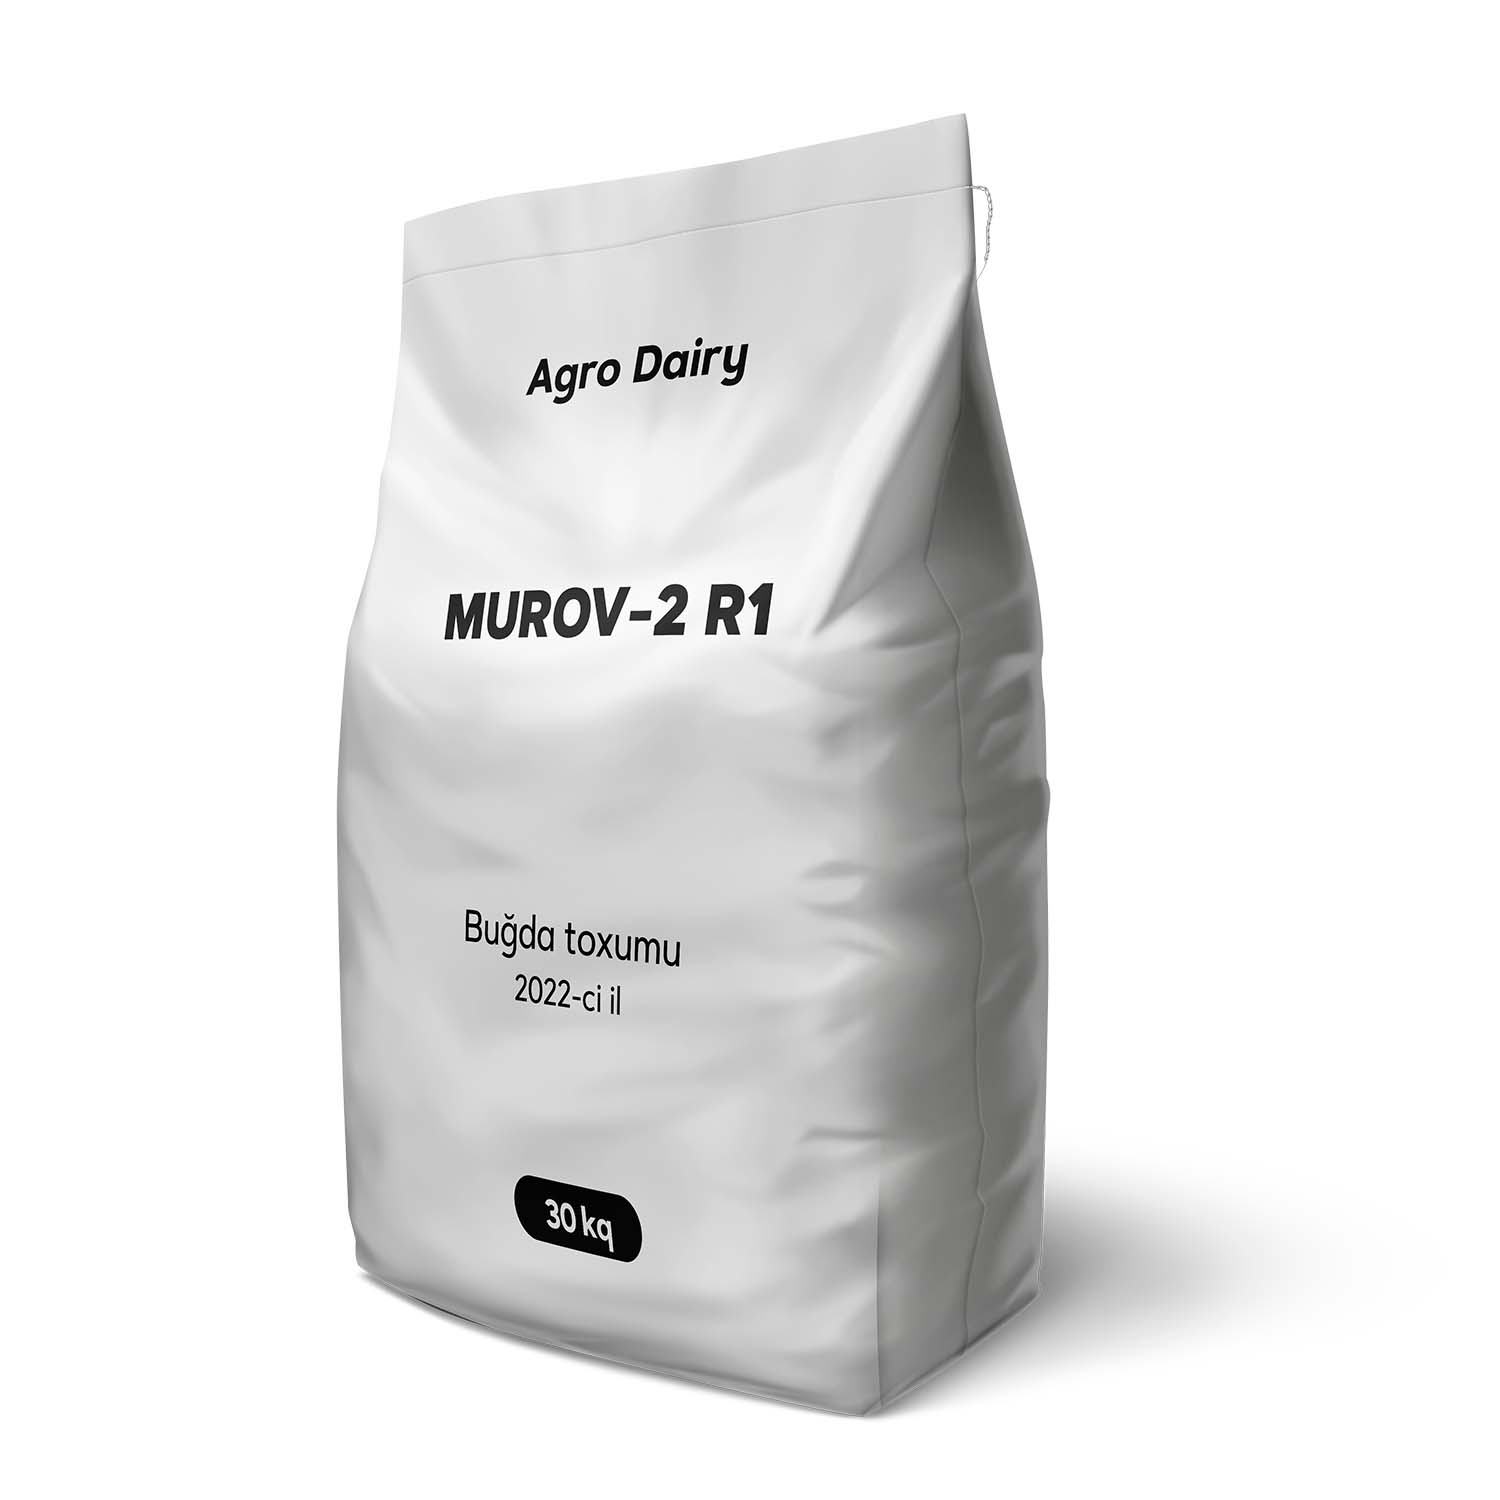 Buğda toxumu Murov-2 R1/Agro Dairy 30 kq 2022-ci il